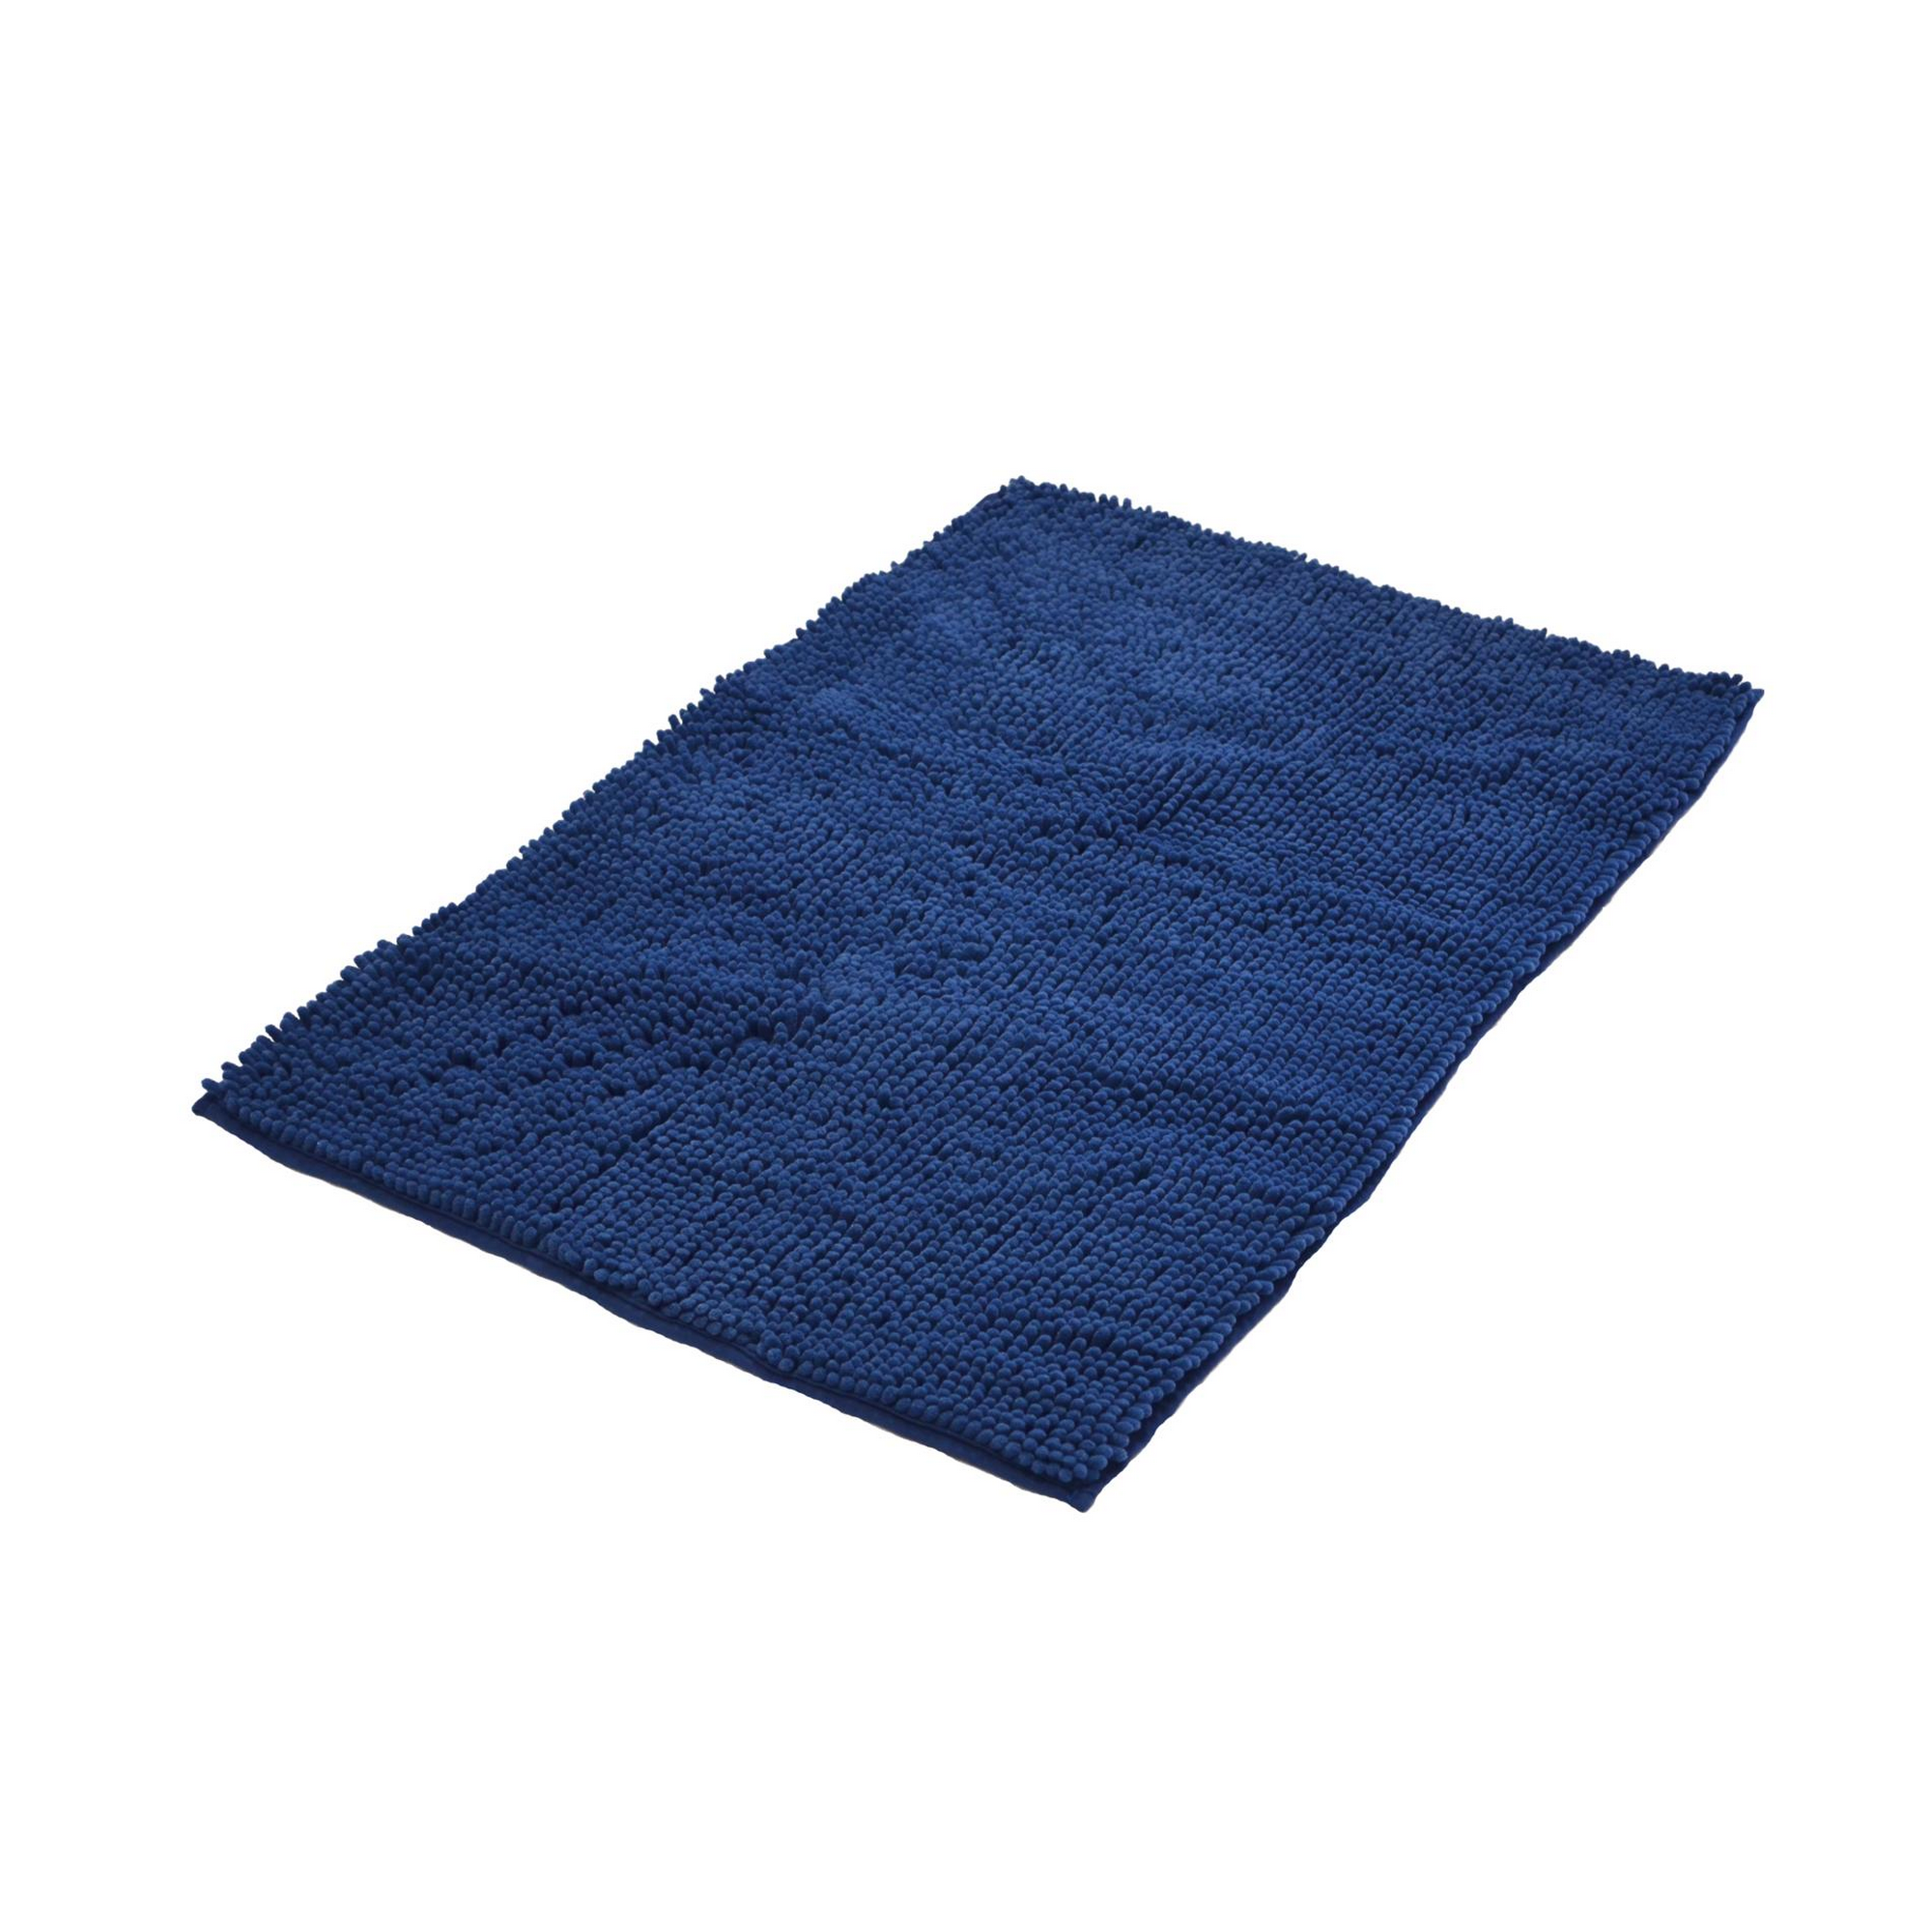 Badezimmerteppich 'Soft' dunkelblau 85 x 55 cm + product picture